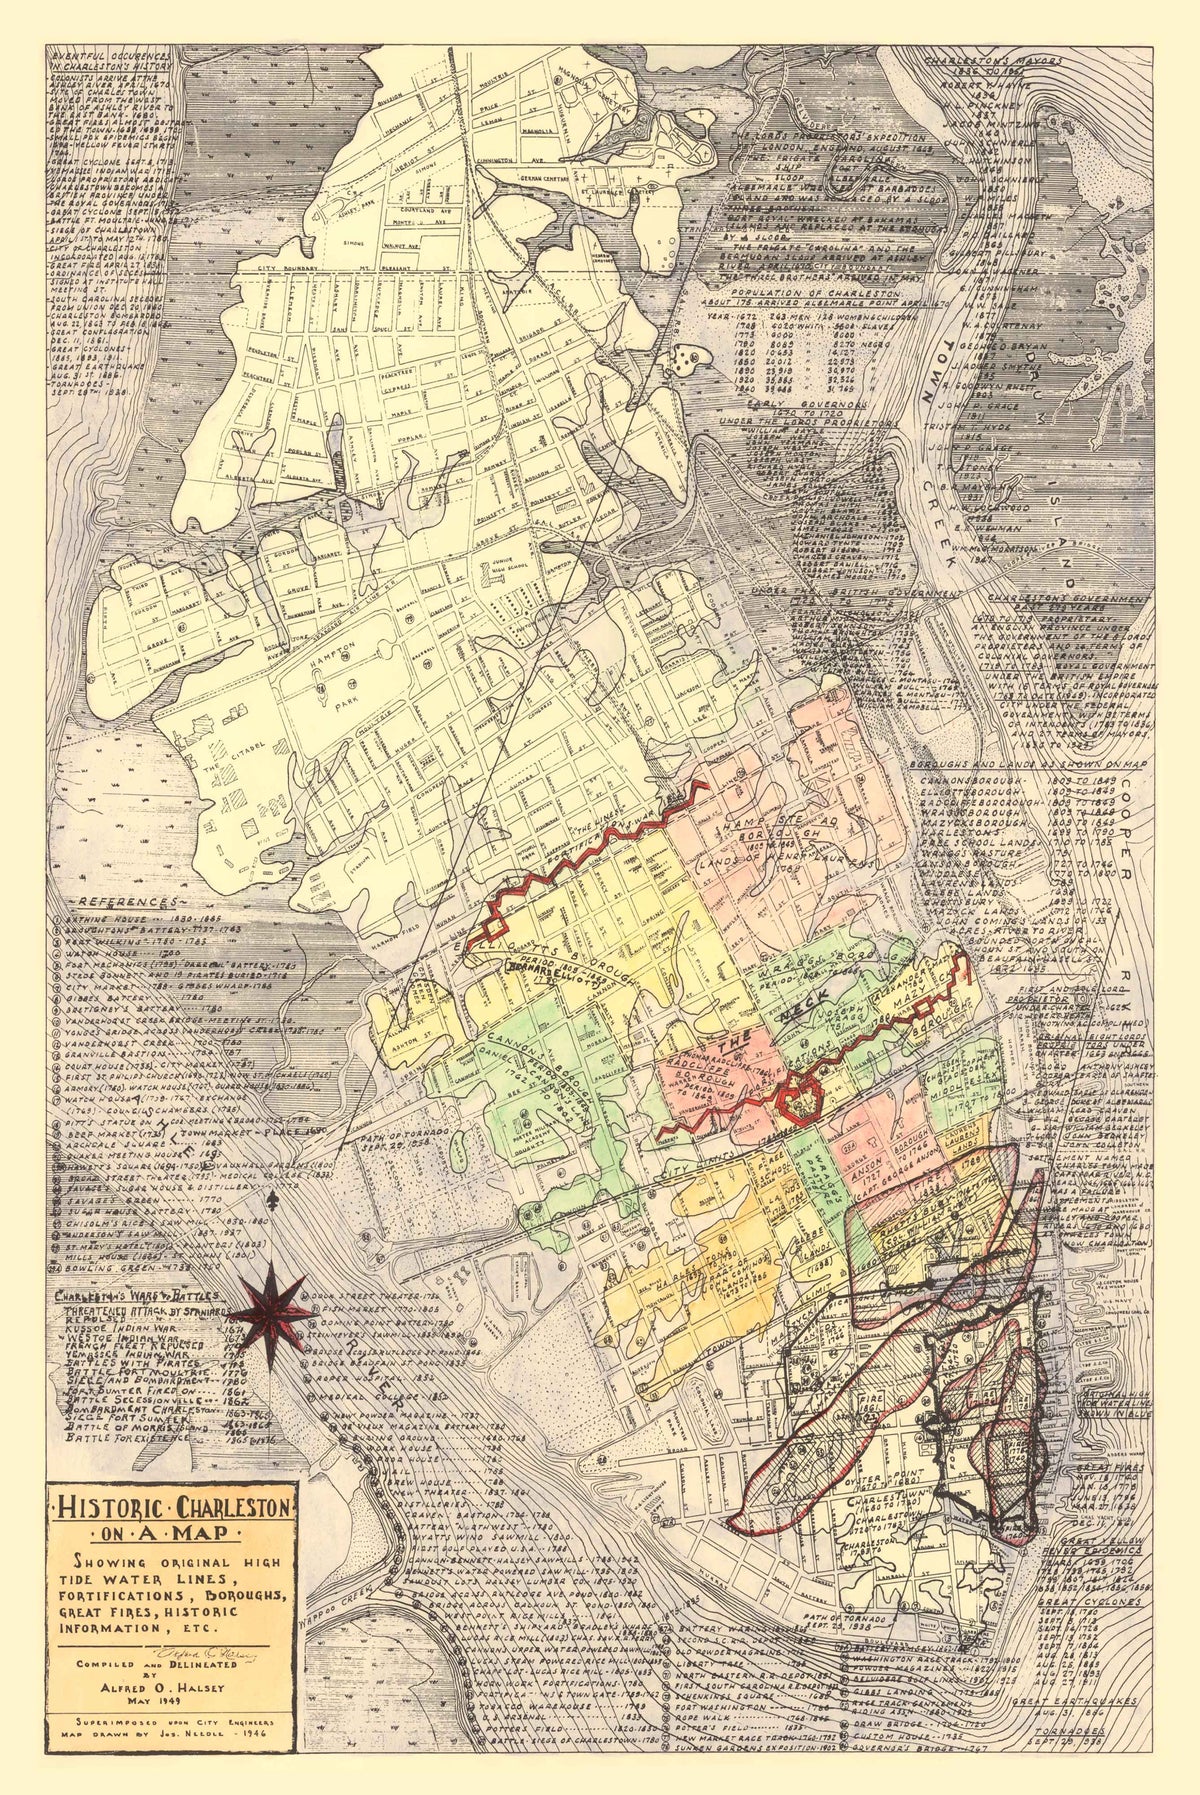 1946 Halsey Map of Charleston - Charleston History on a Map